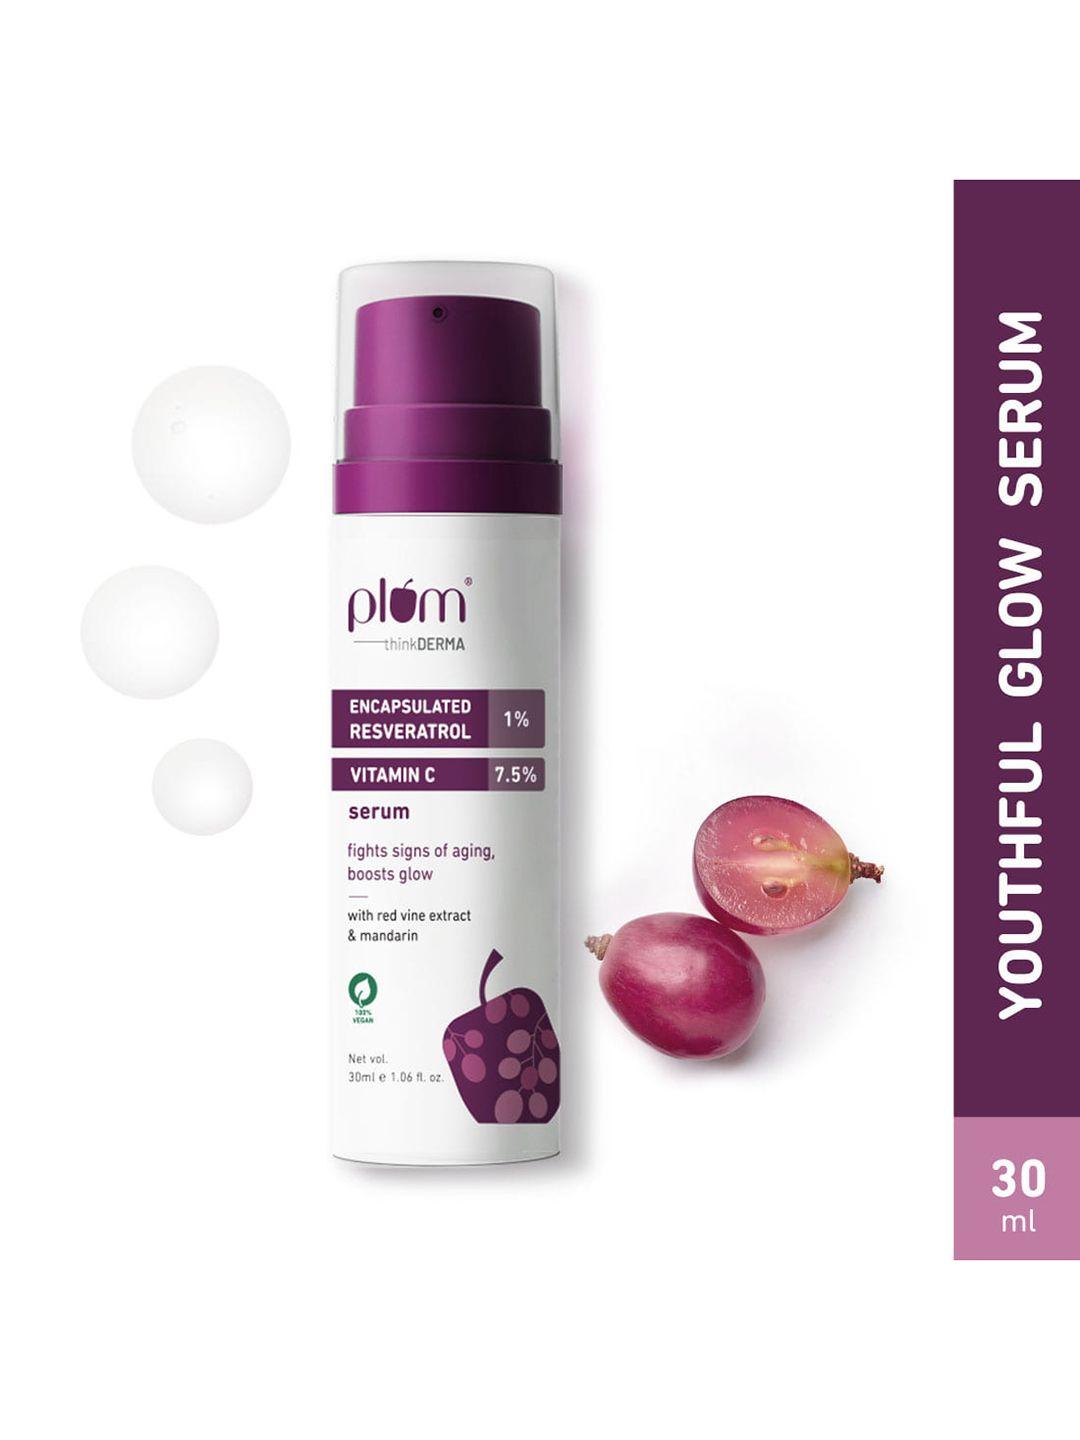 plum thinkderma 1% encapsulated resveratrol & 7.5% vitamin c face serum 30 ml